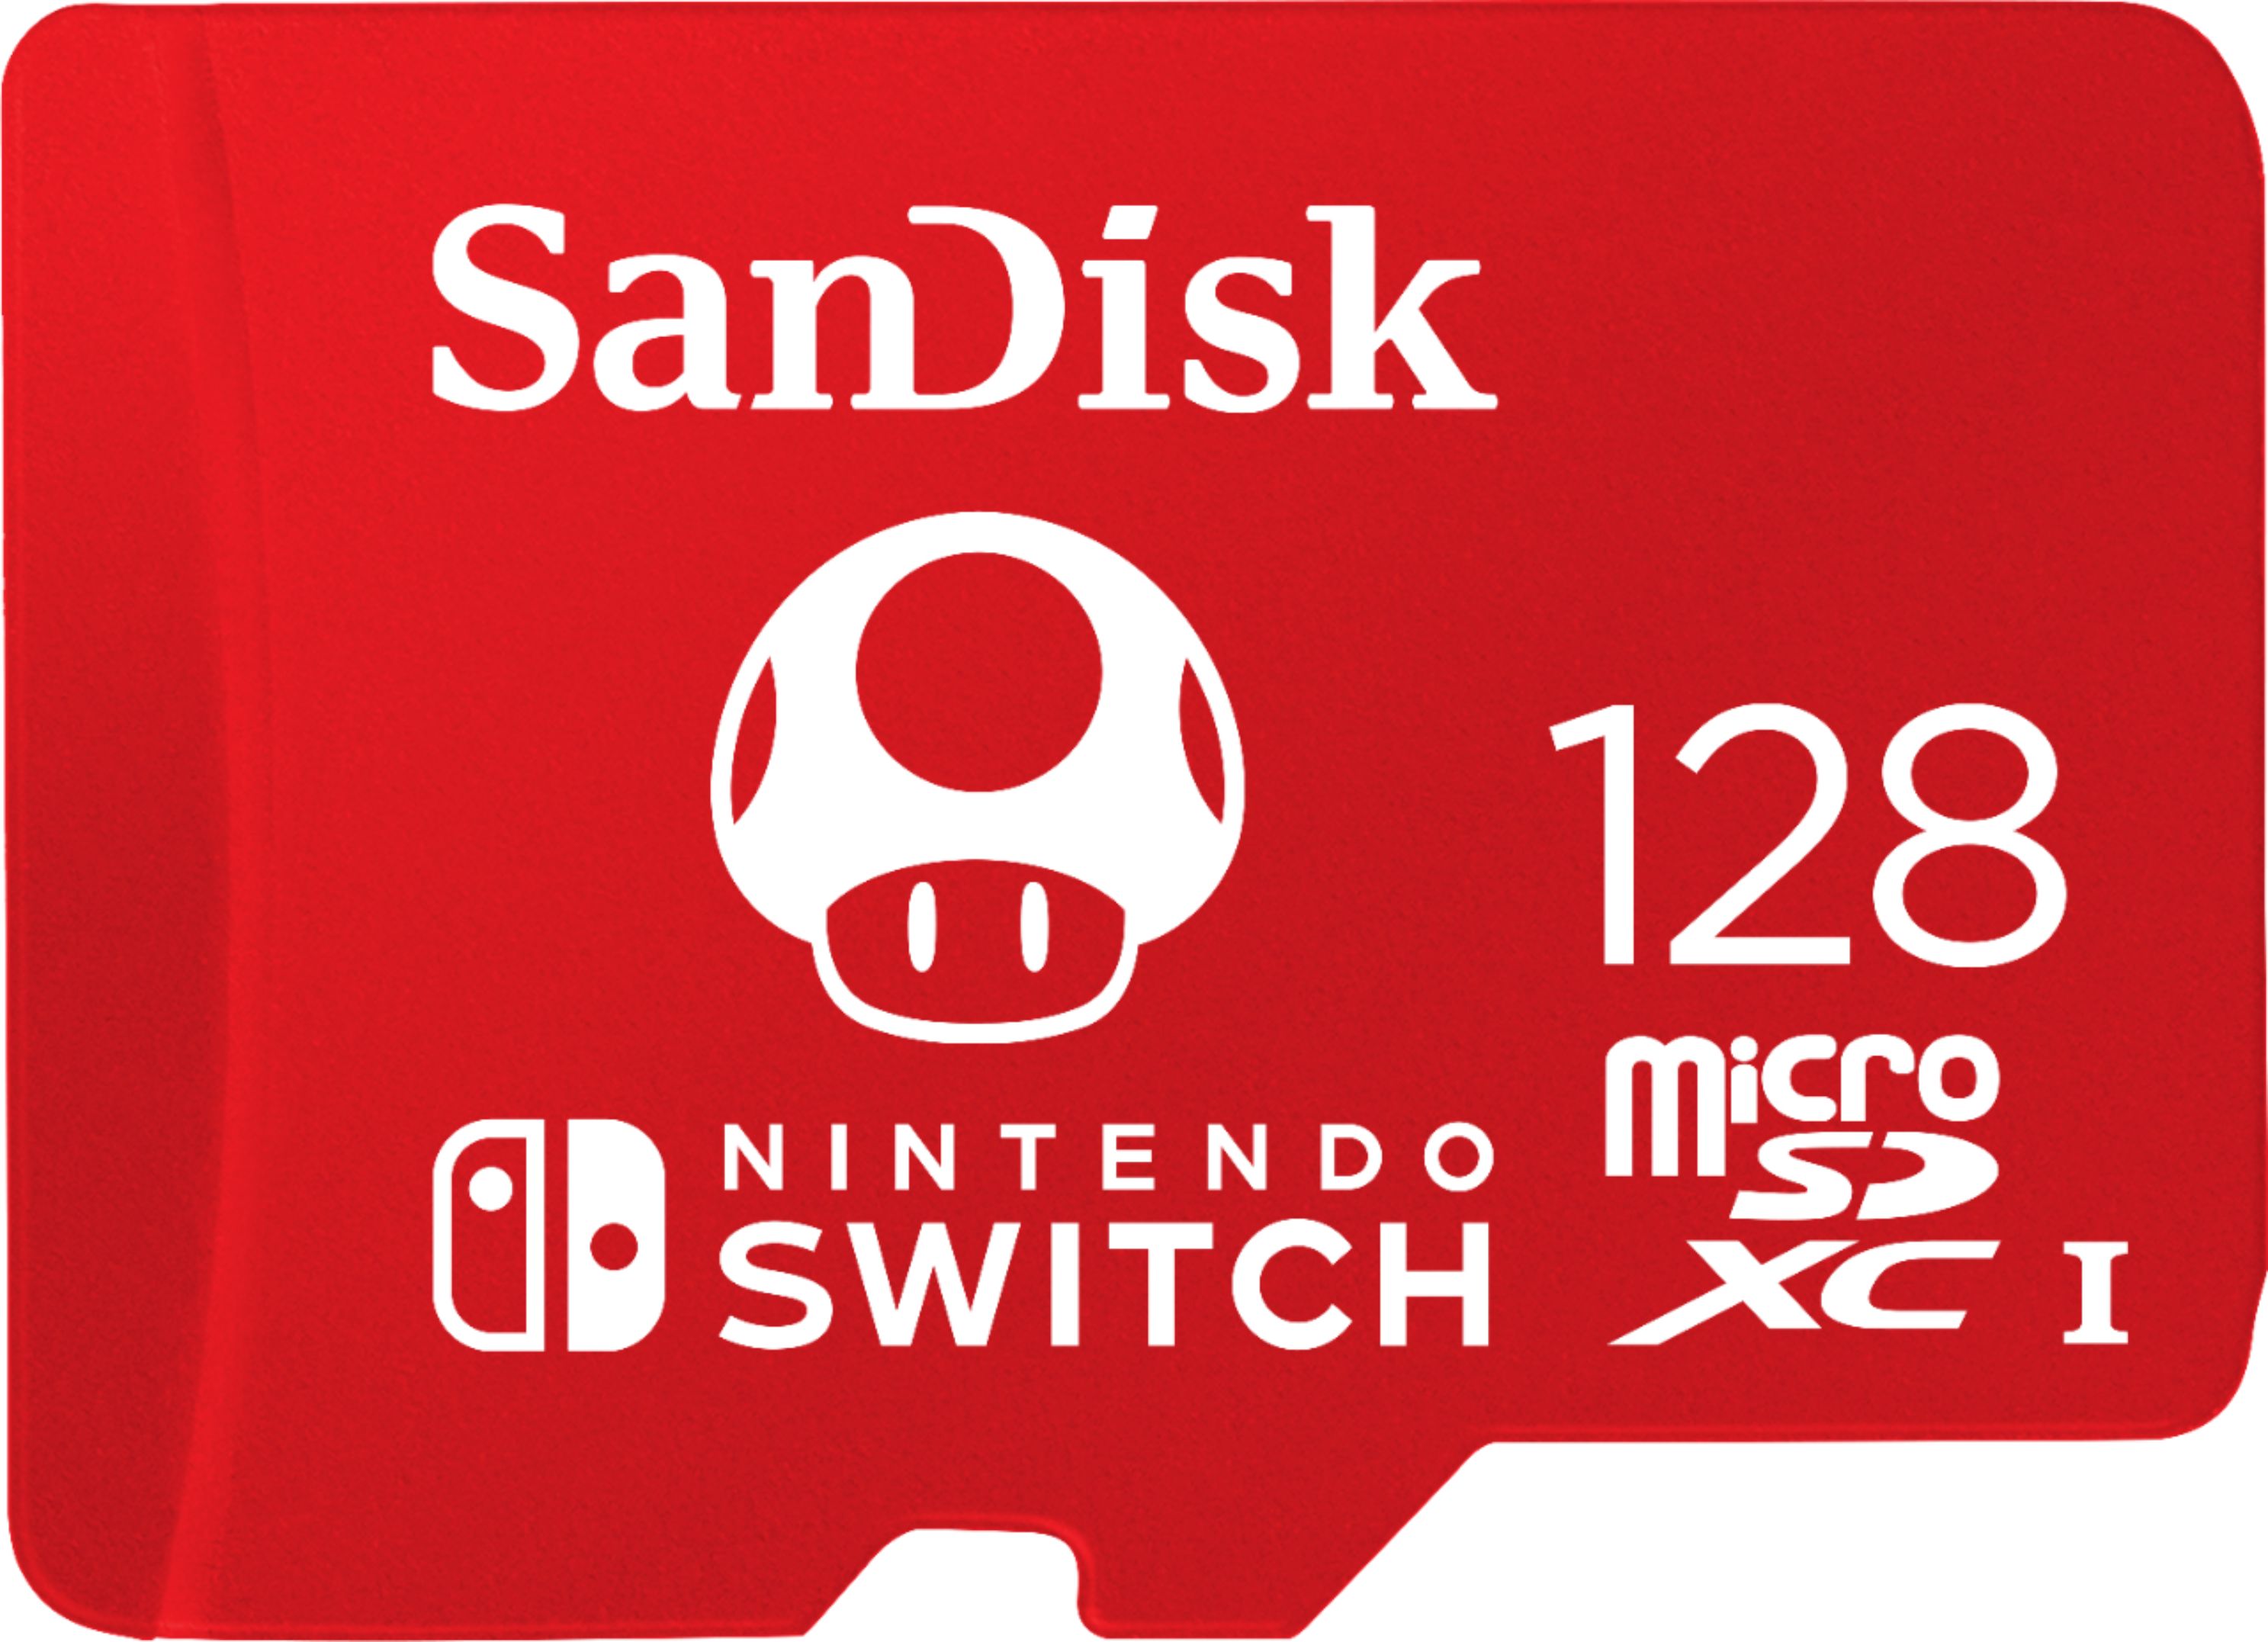 SanDisk 128GB microSDXC UHS-I Memory Card for Nintendo Switch SDSQXBO-128G-ANCZA  - Best Buy